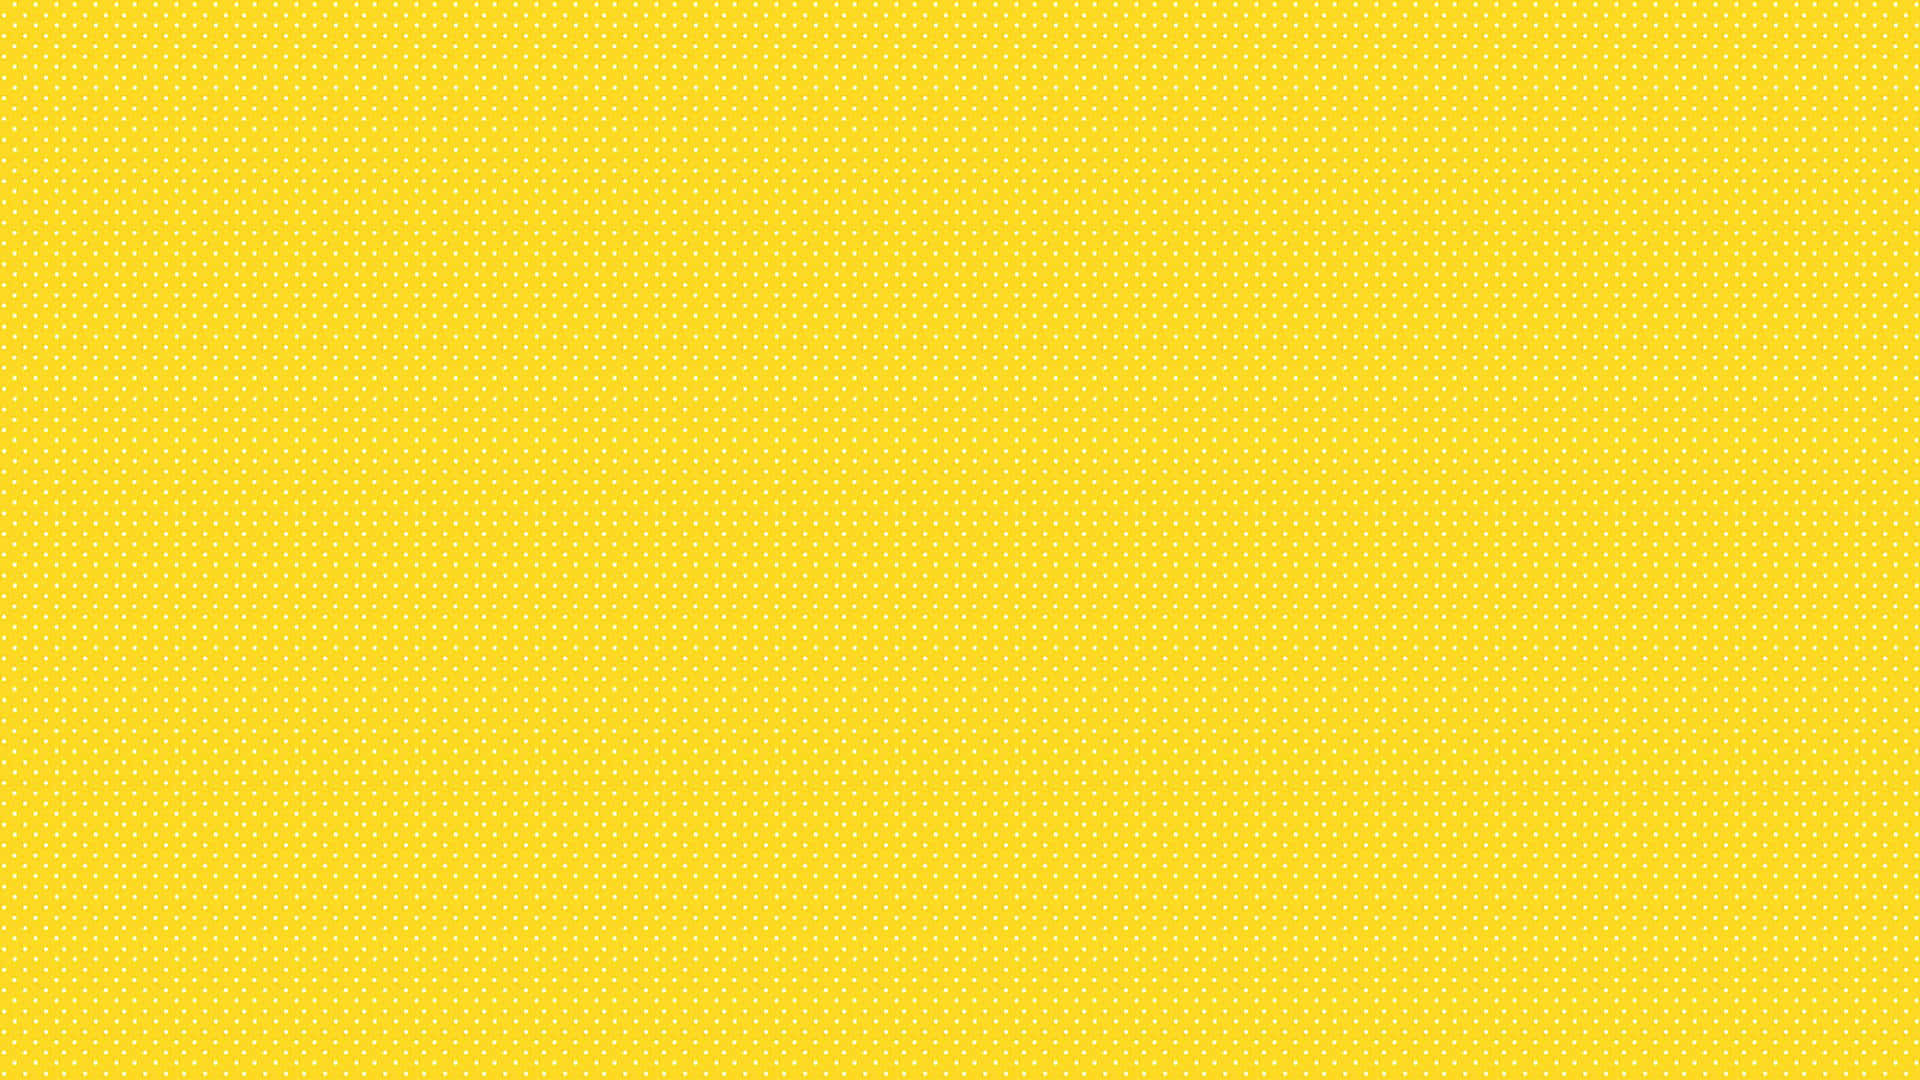 Bright and cheery plain yellow background